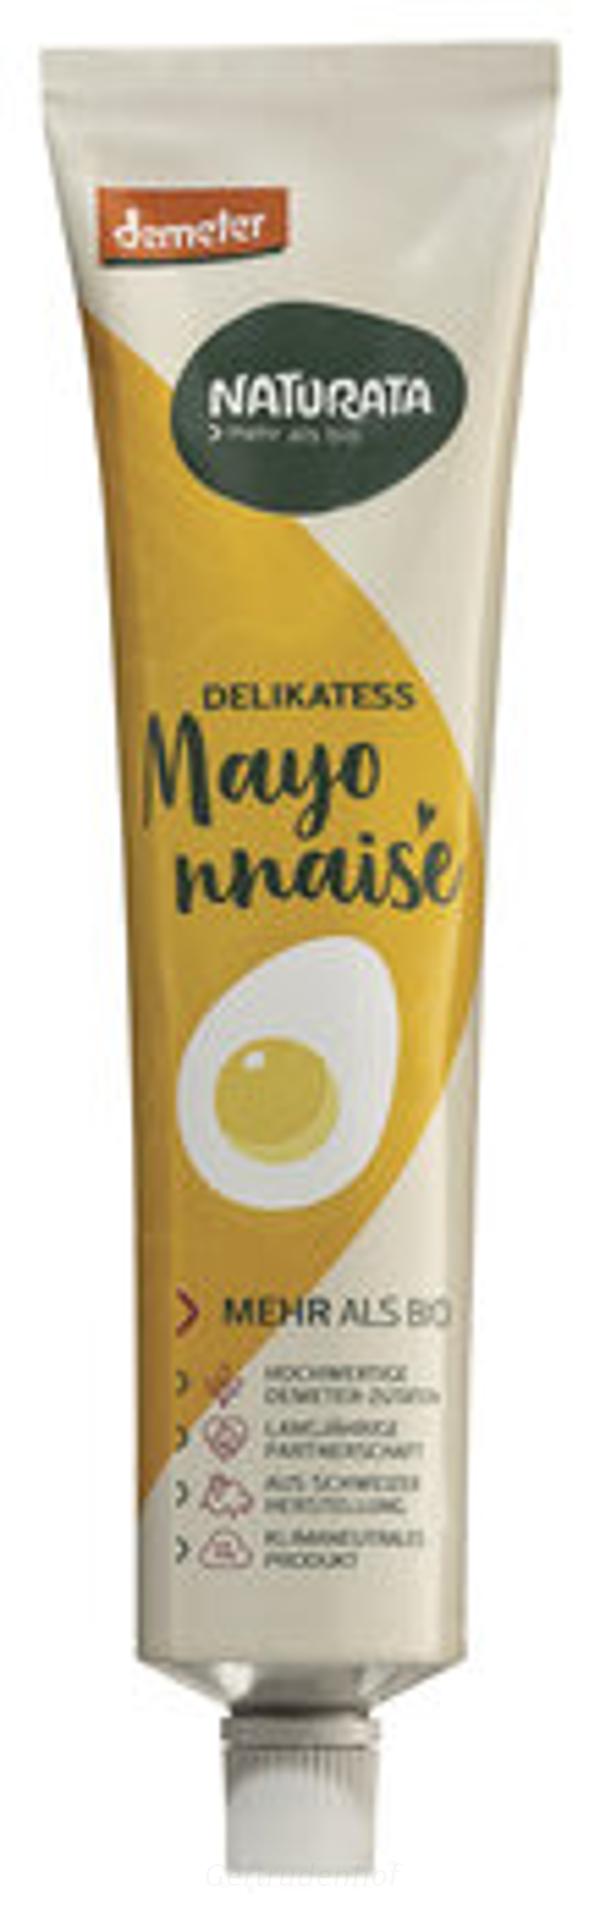 Produktfoto zu Delikatess Mayonnaise Tube NAT